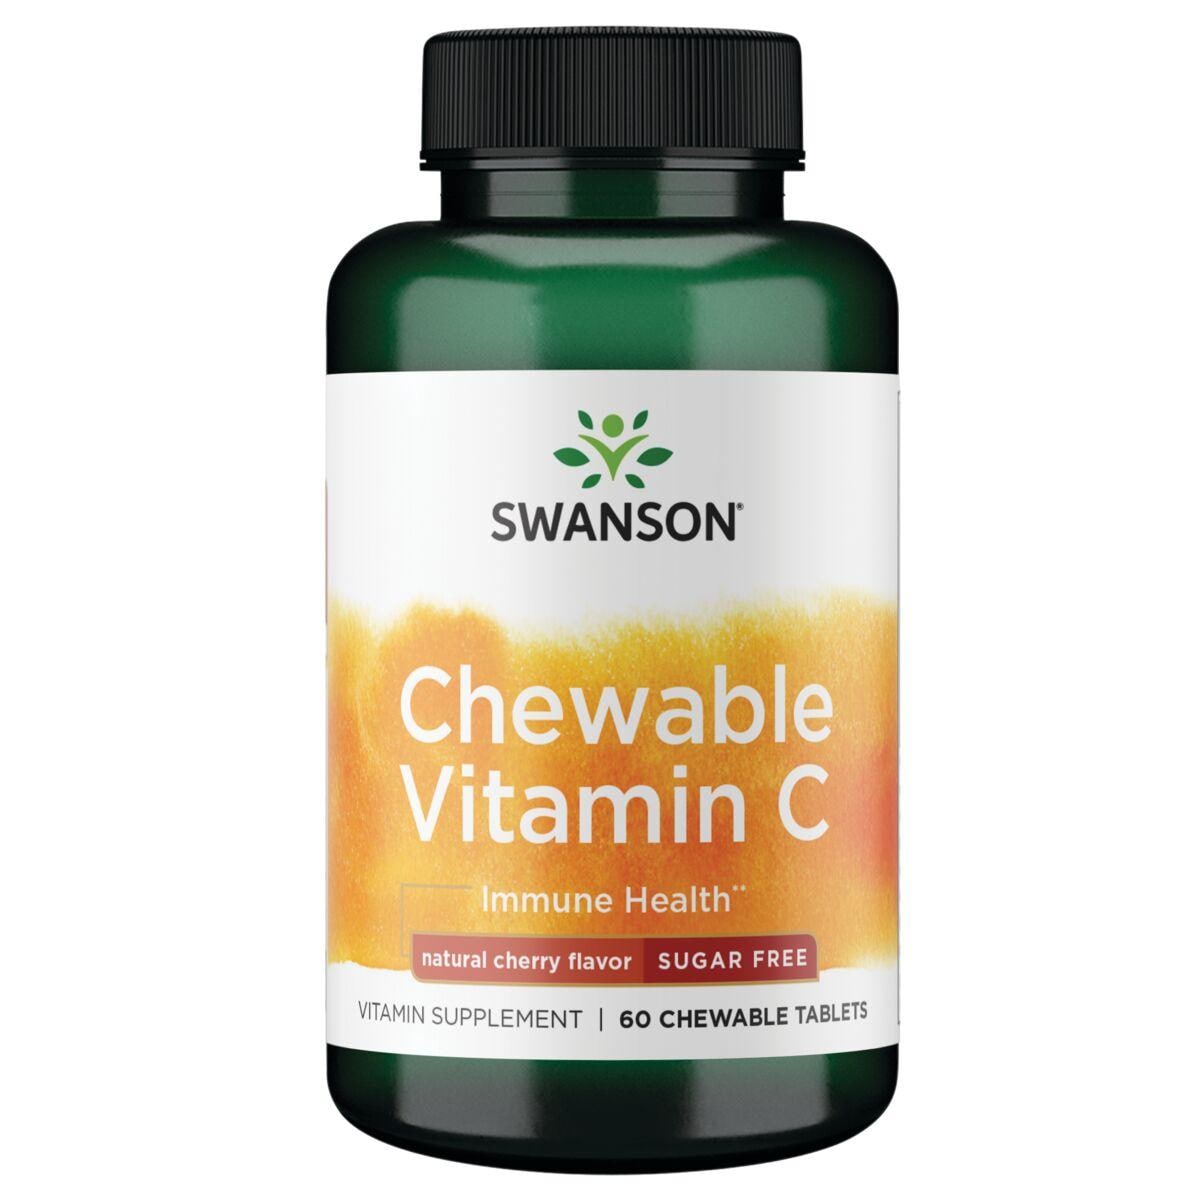 Swanson Premium Chewable Vitamin C - Natural Cherry Flavor Sugar-Free 60 Chewables